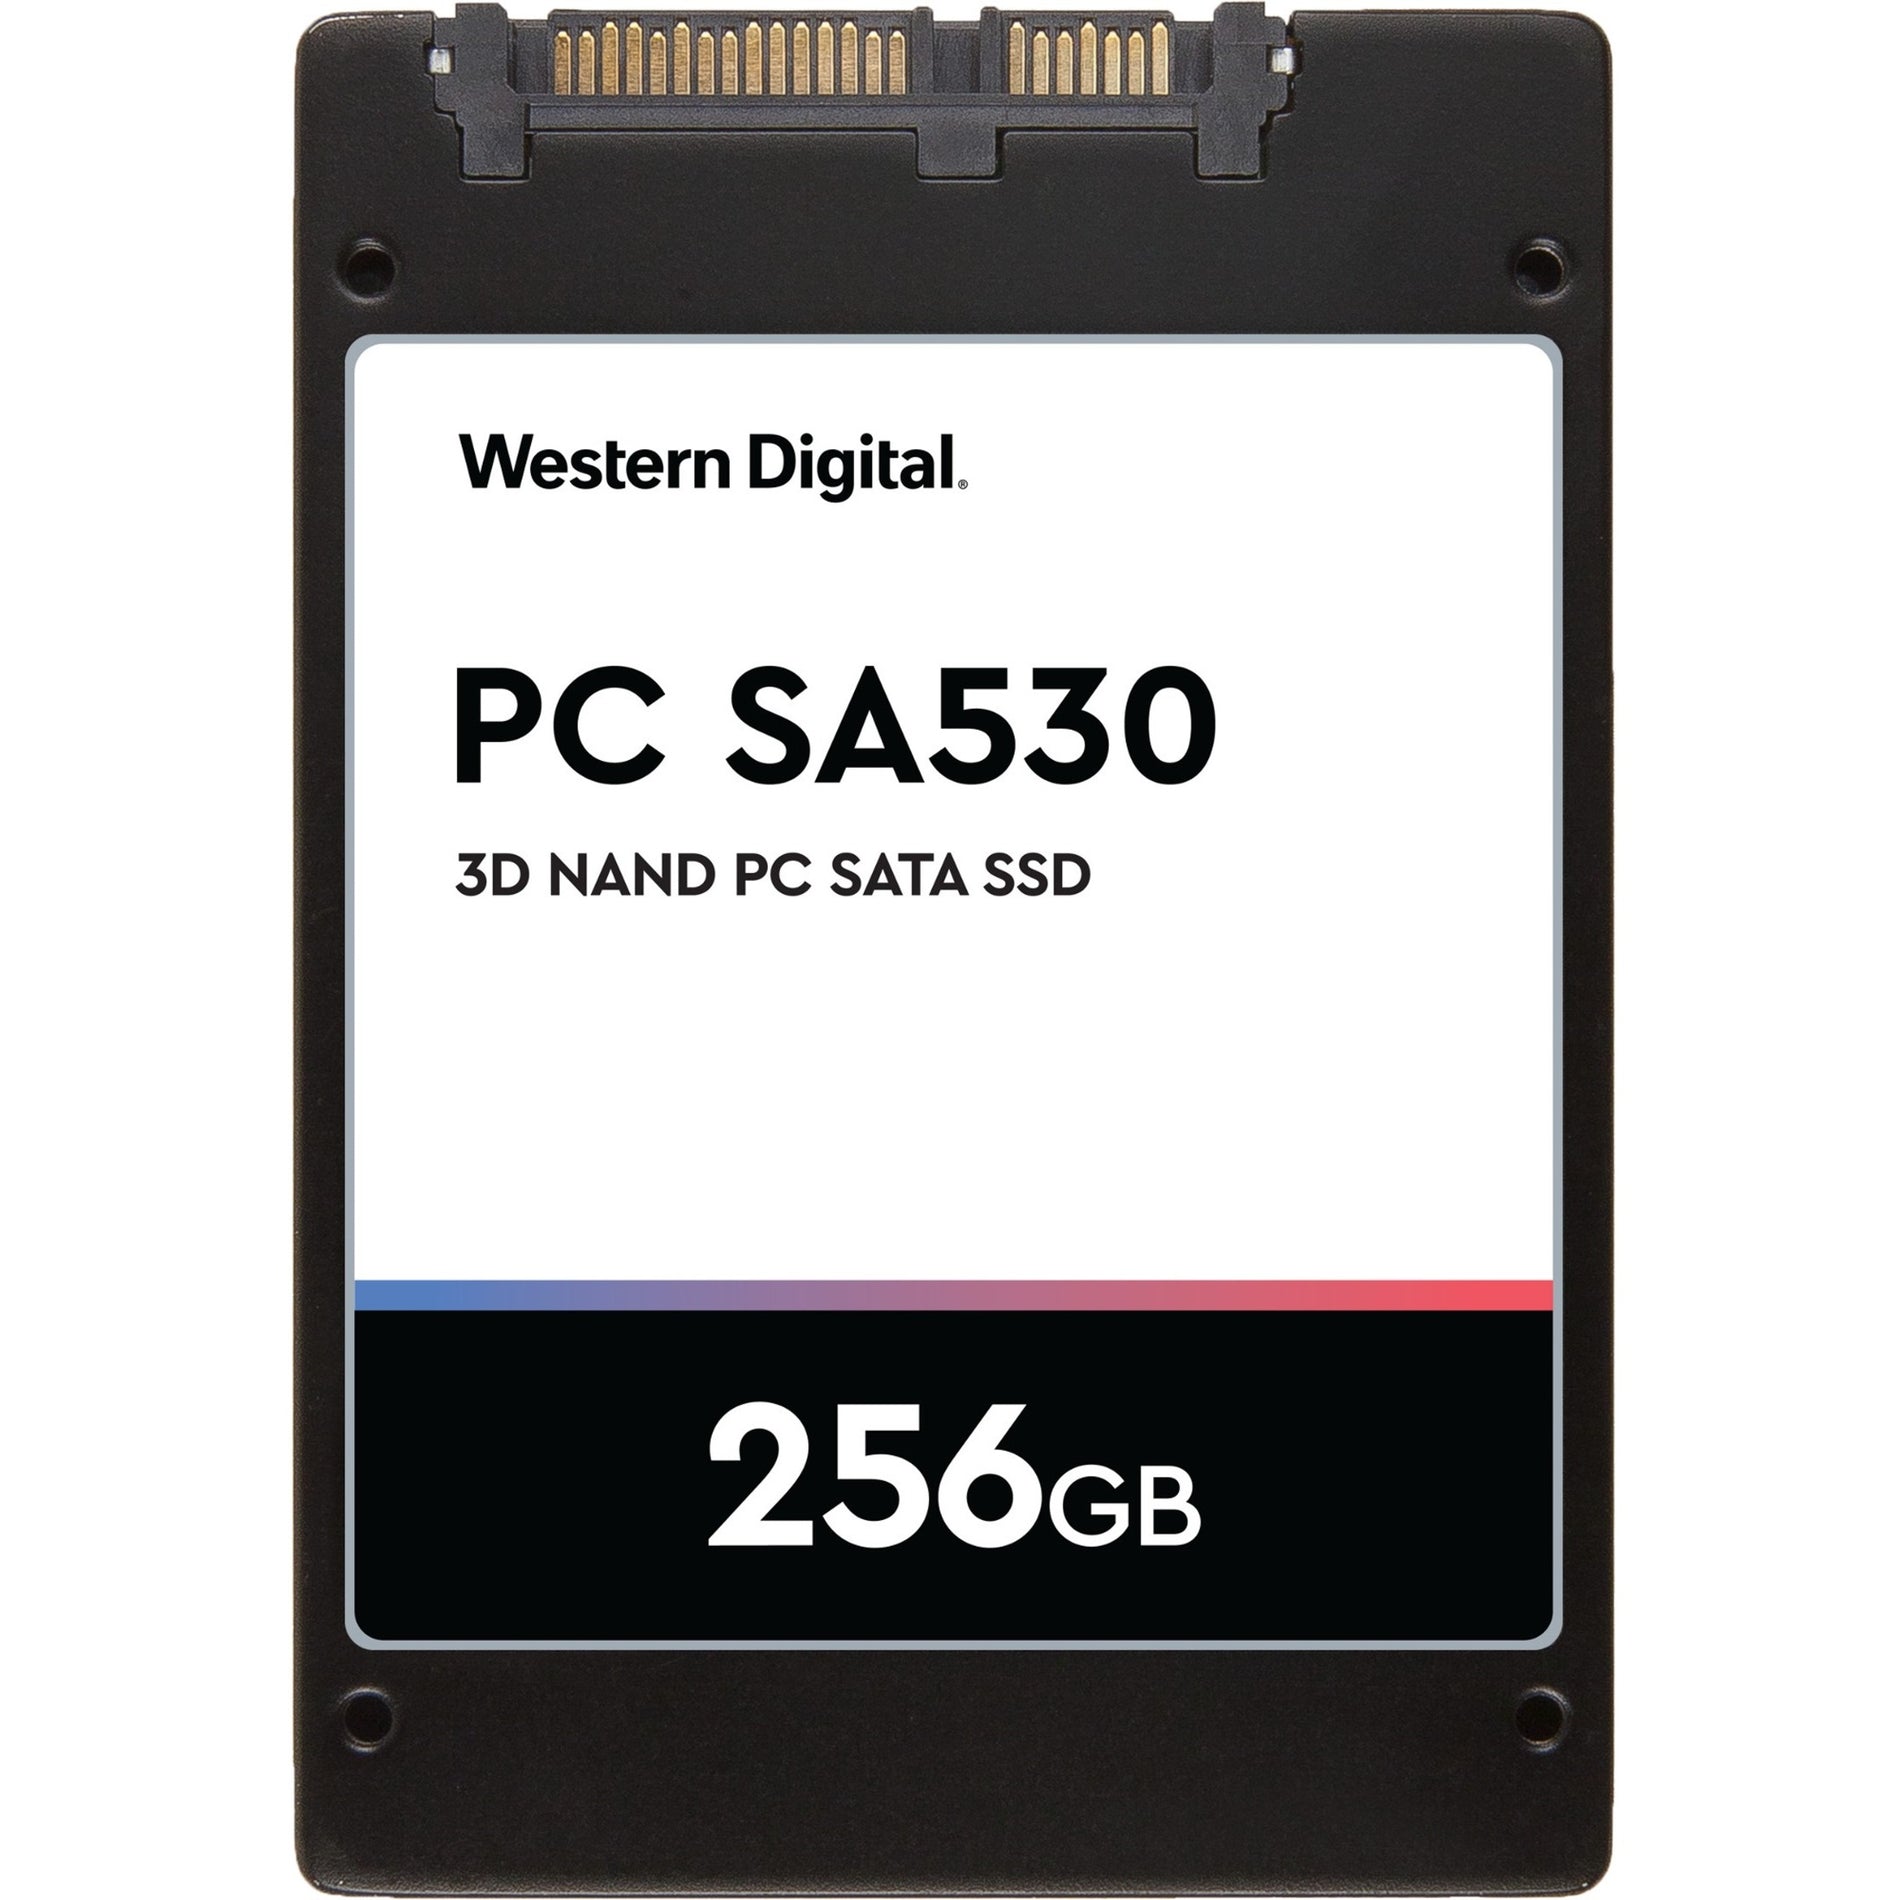 WD SDATB8Y-256G-1122 PC SA530 3D NAND SATA SSD, 256GB, 550 MB/s Read, 525 MB/s Write